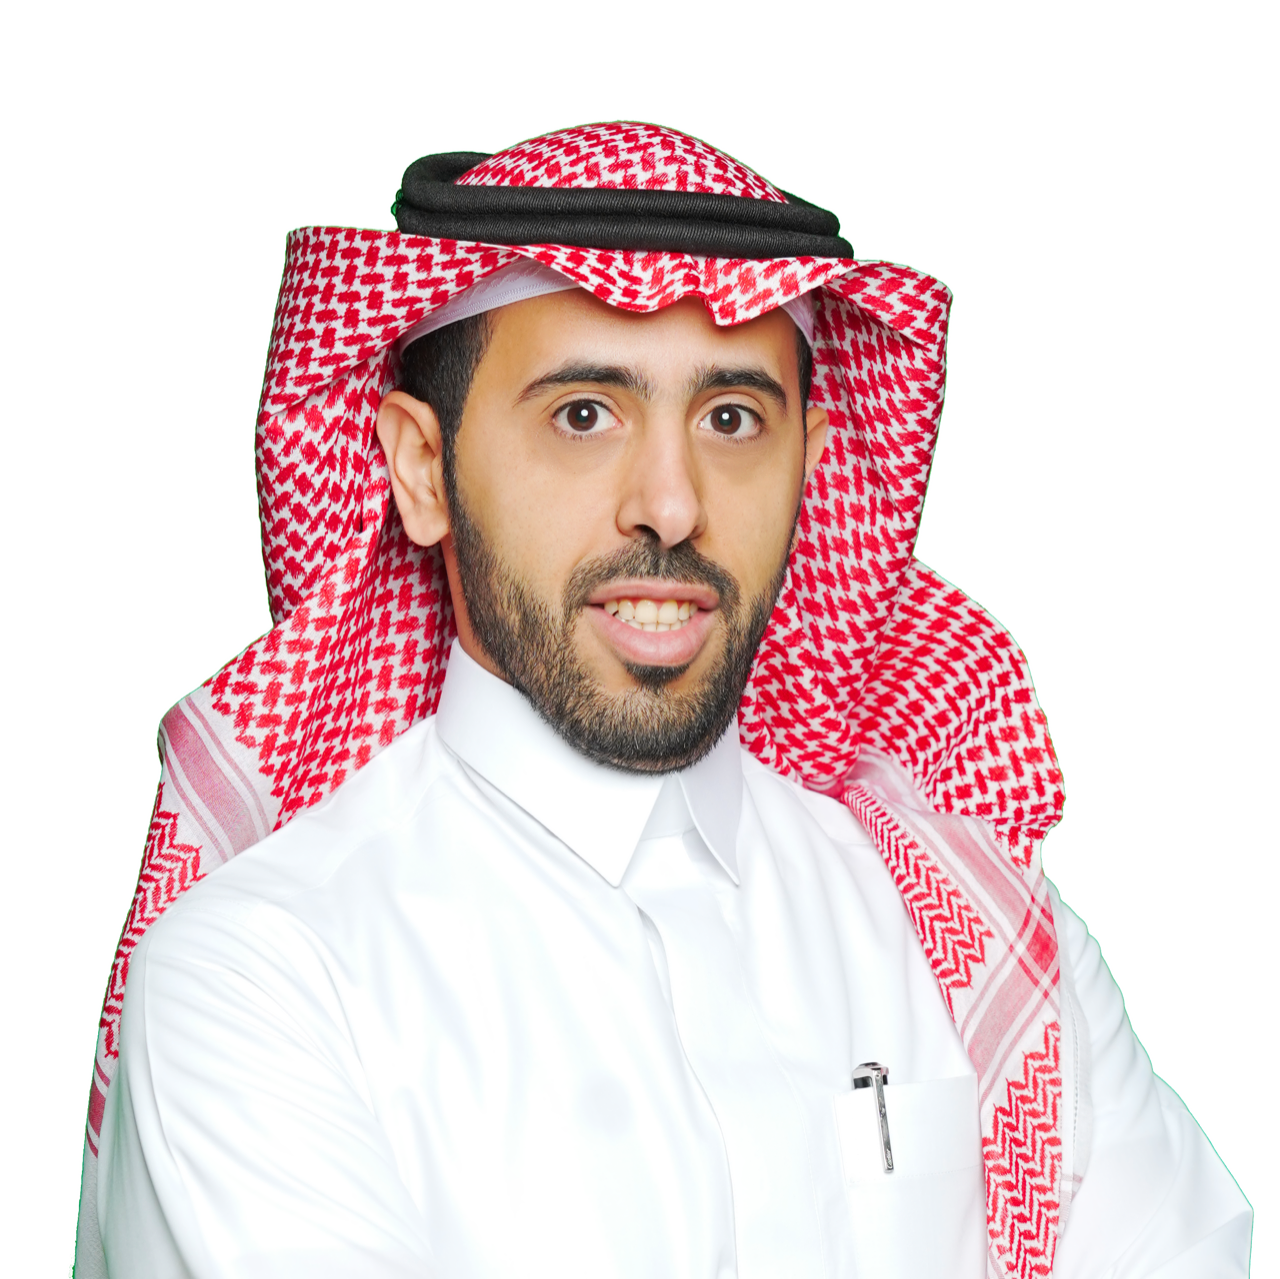 Dr. Abdulaziz Aldaej has been Promoted to the Rank of Associate Professor